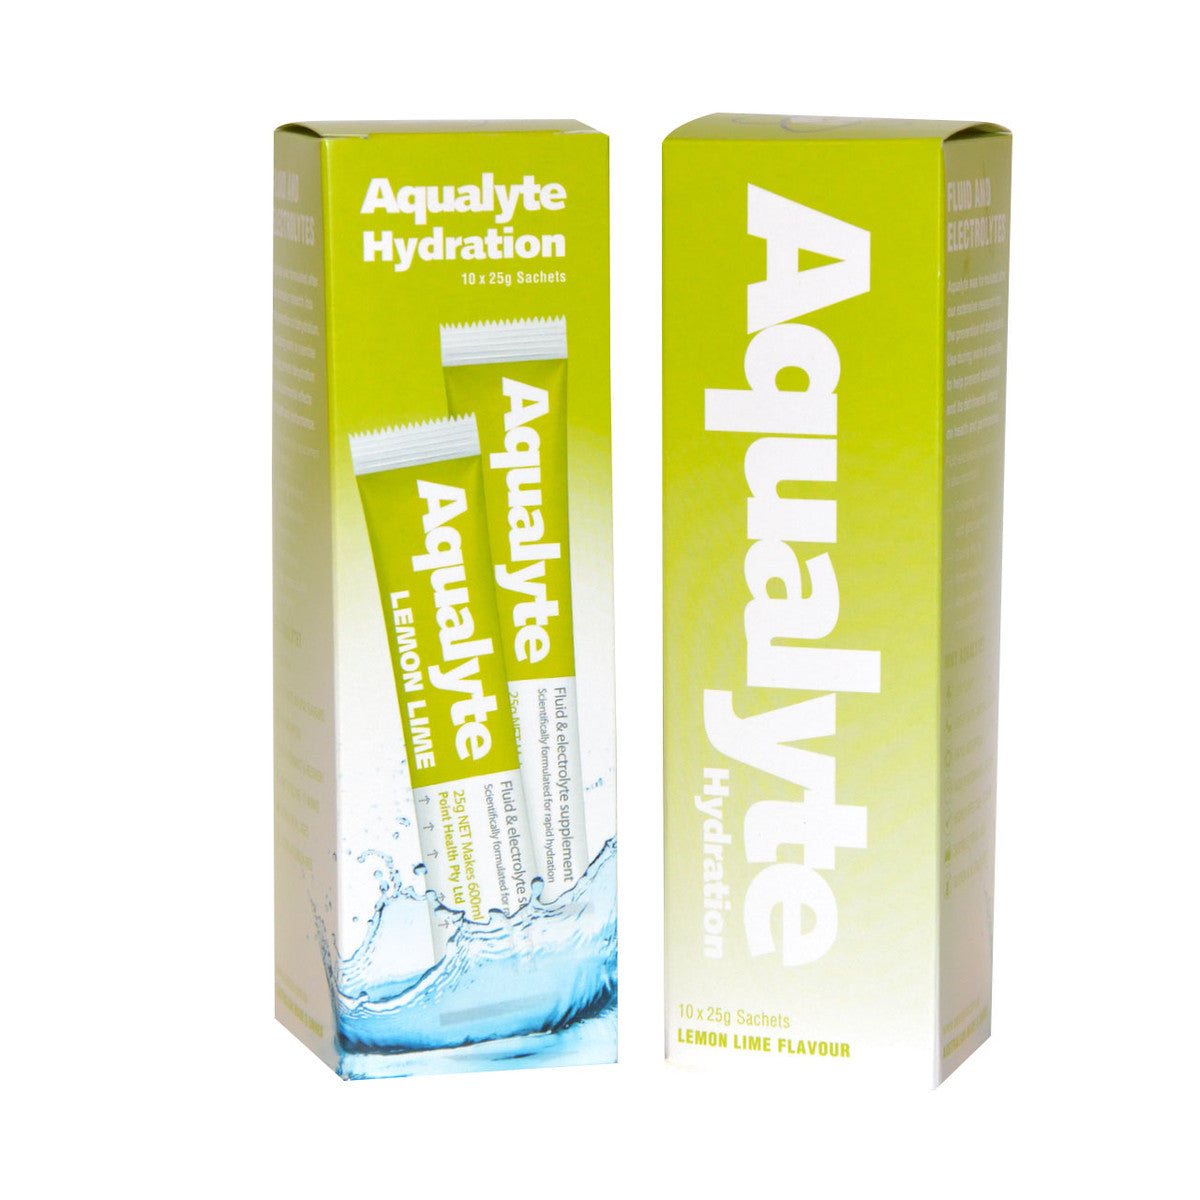 Aqualyte hydration drink 10 x 25g sachets Lemon Lime